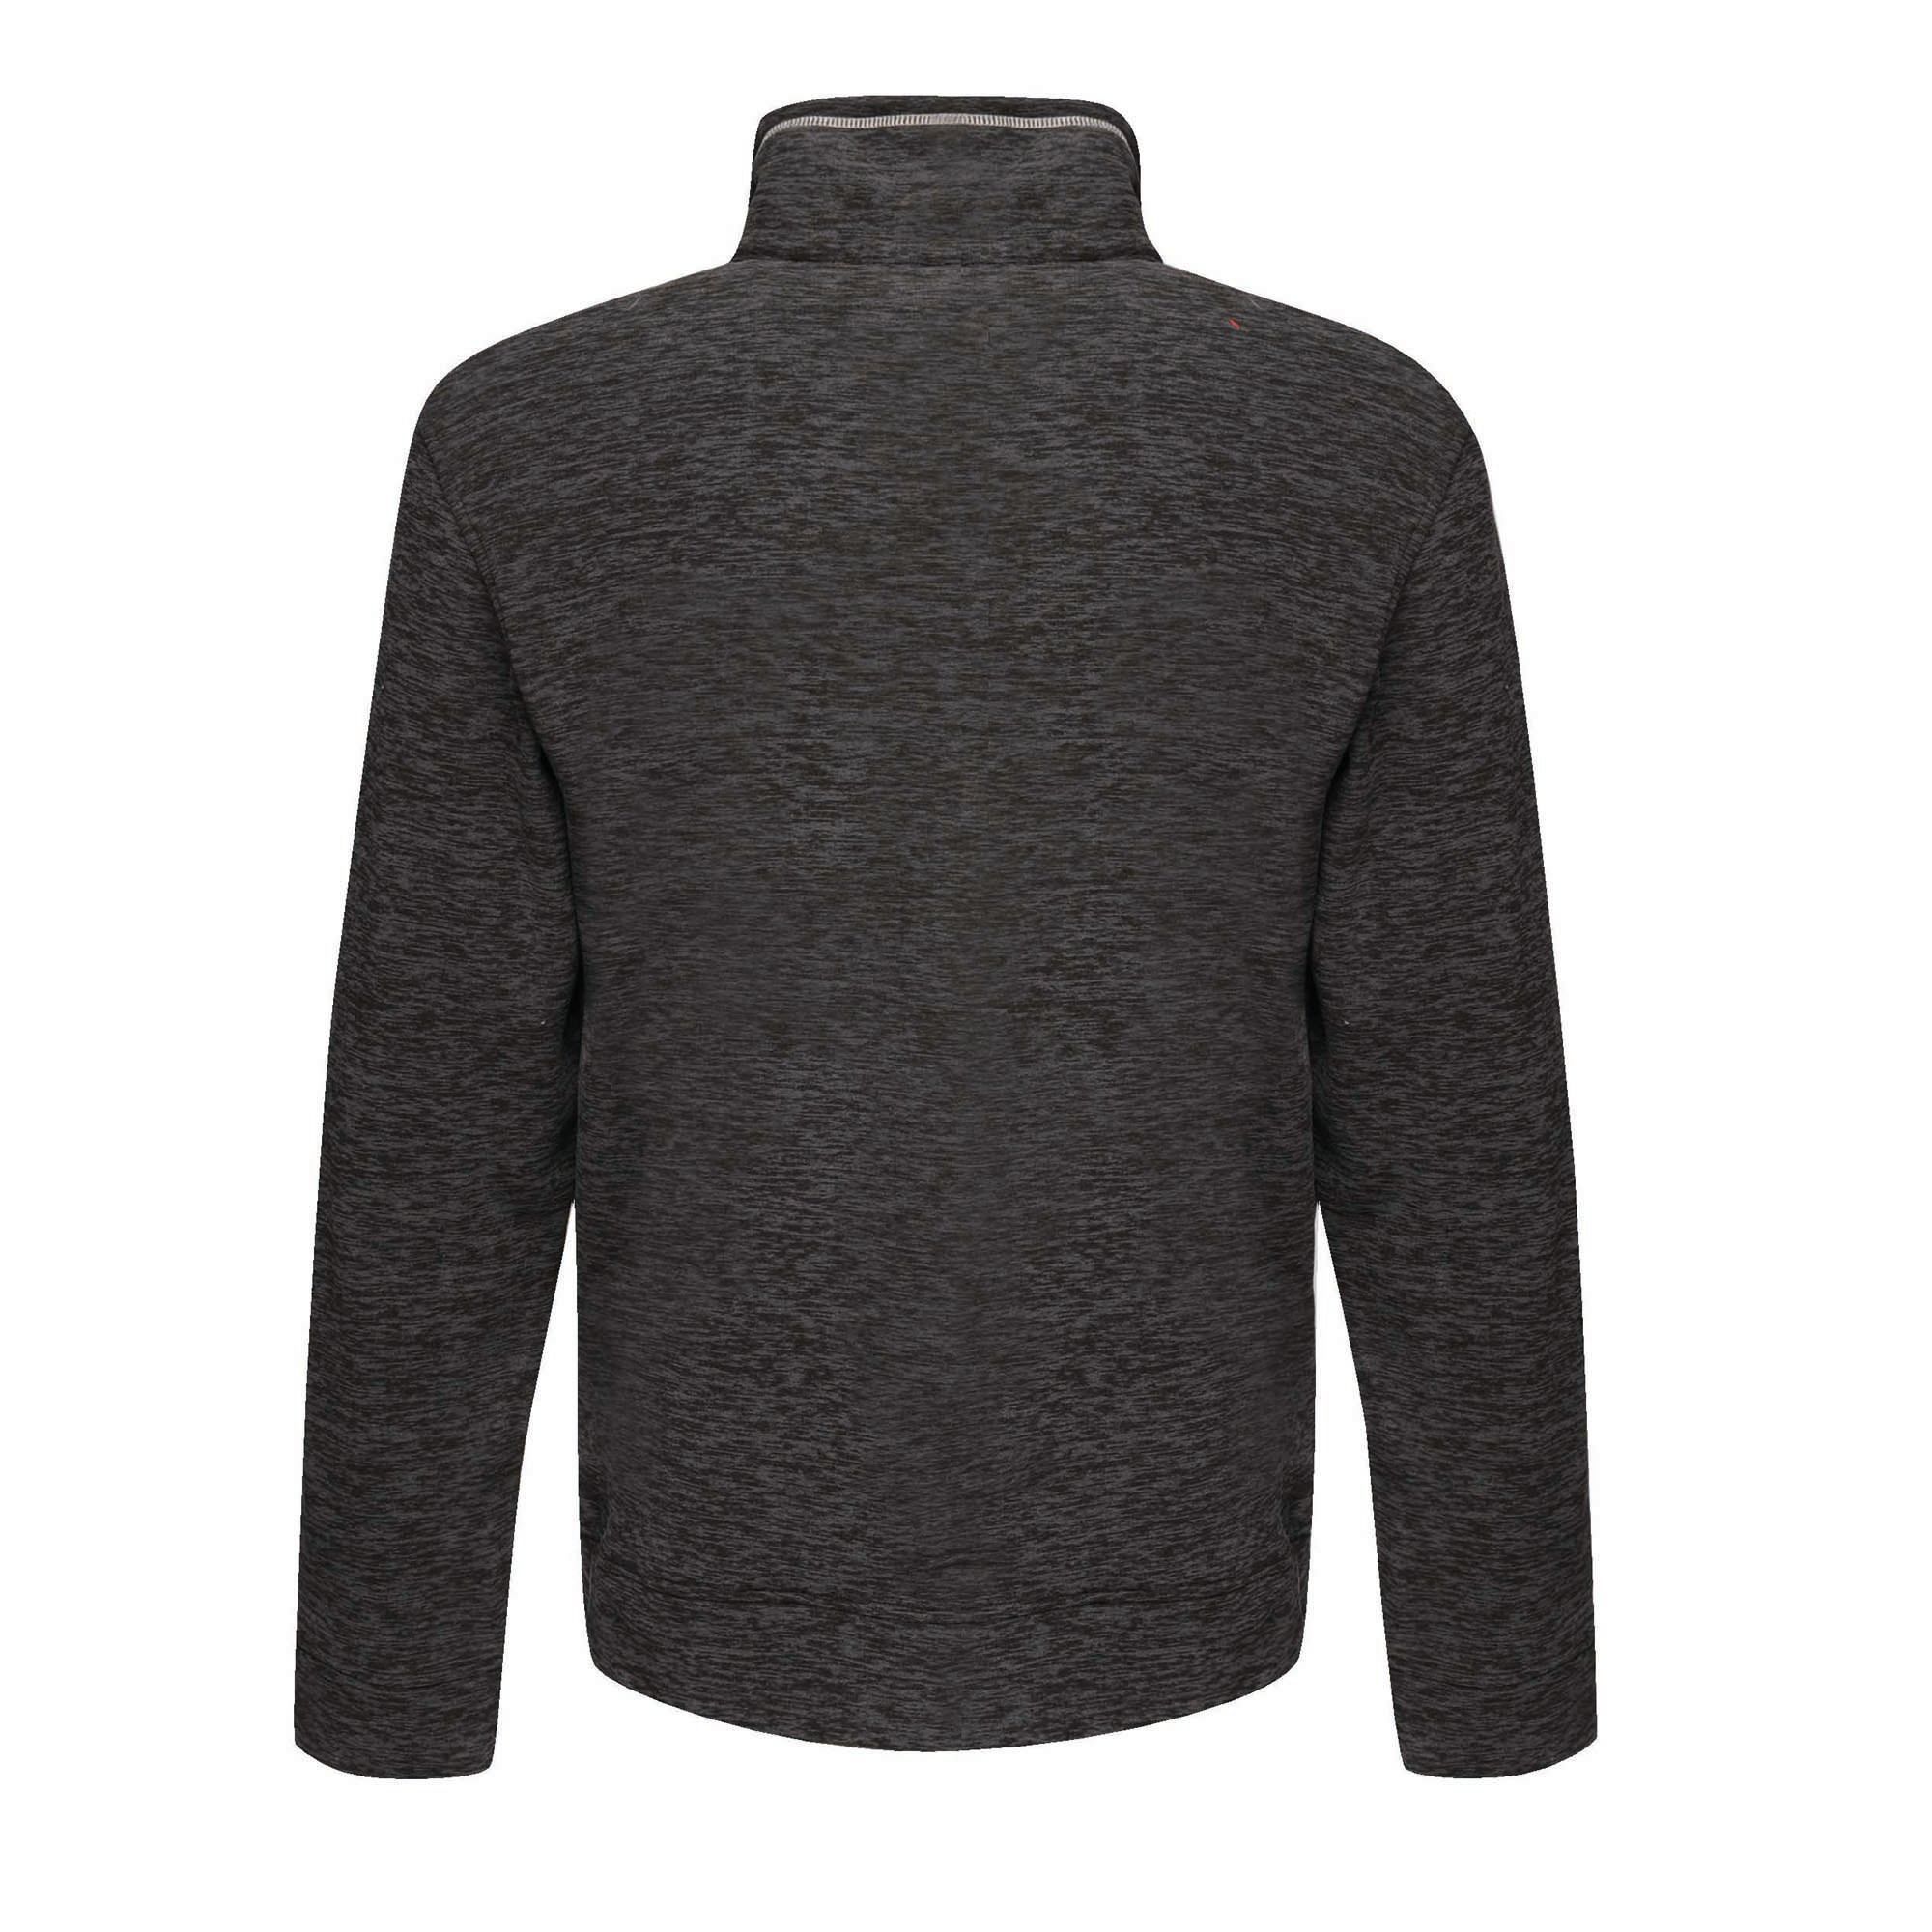 100% polyester marl knit effect fleece. 1 side anti-pill Symmetry fleece. Quick drying. Chin guard. 2 zipped lower pockets.Self fabric cuffs.